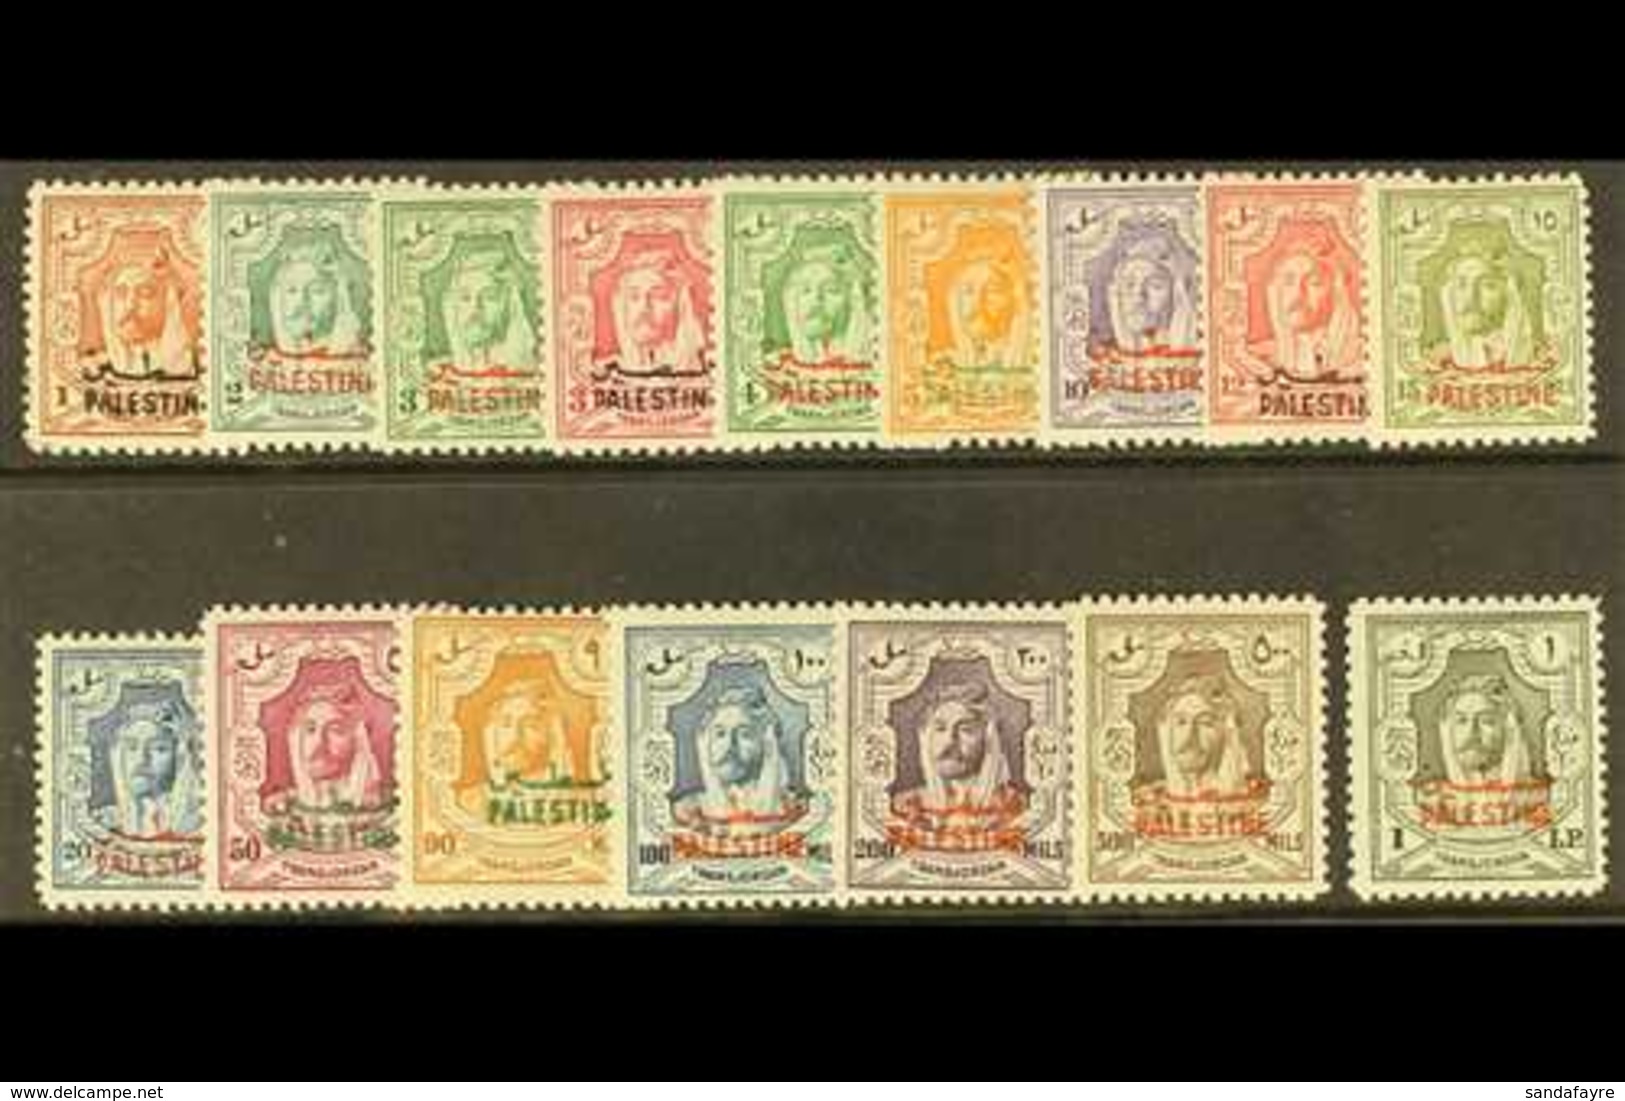 OCCUPATION OF PALESTINE  1948 Set £1 Complete Ovptd "Palestine", SG P1/16, Fine Mint. (16 Stamps) For More Images, Pleas - Jordanien